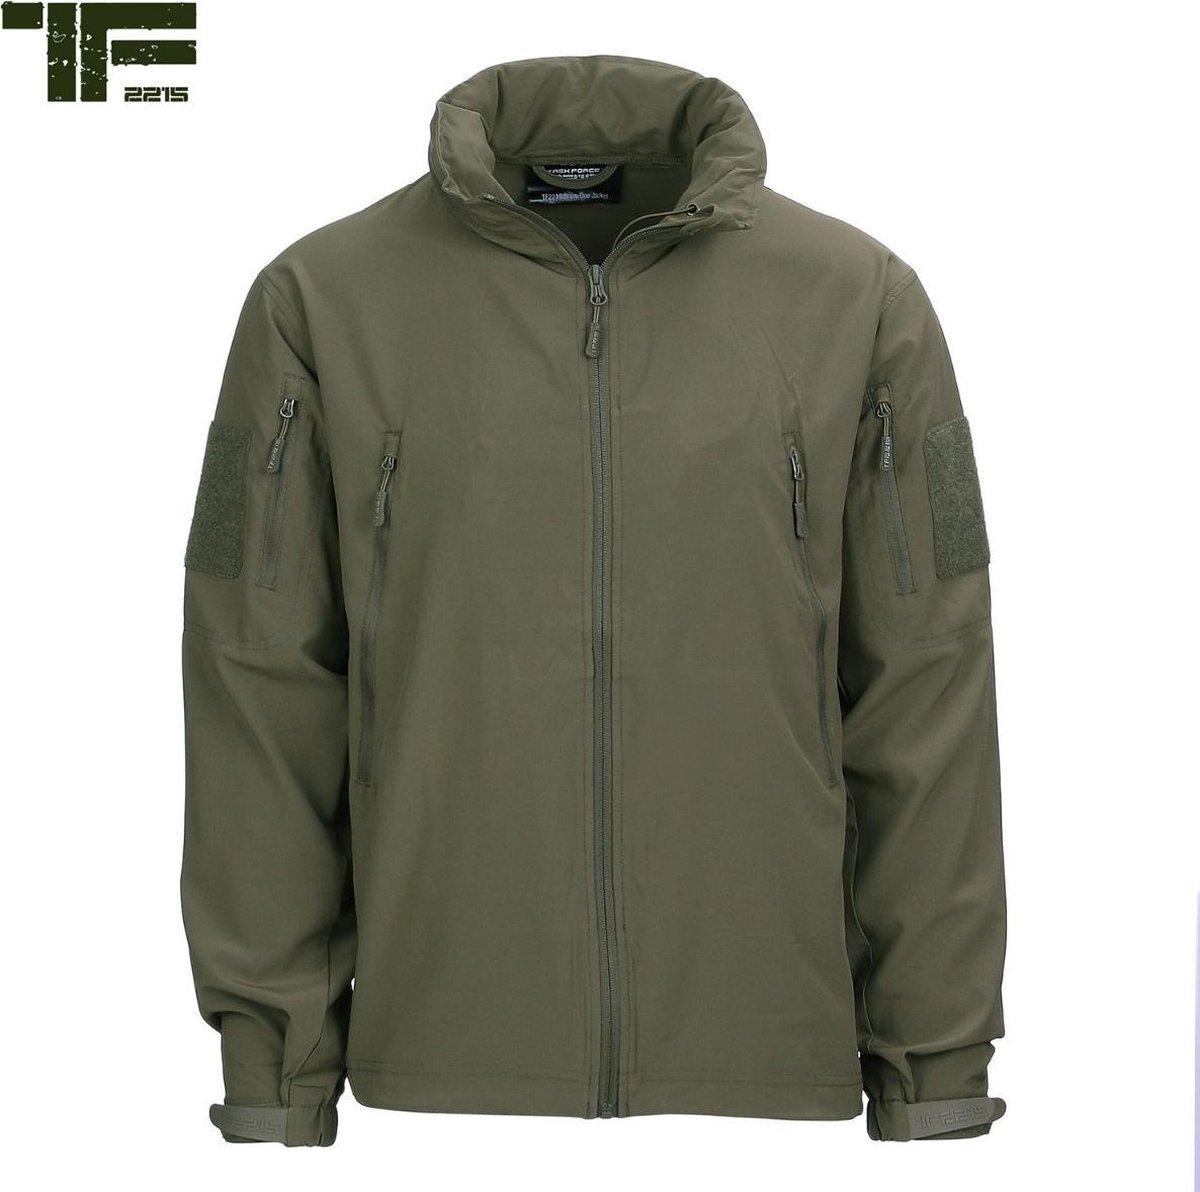 TF-2215 - TF-2215 Bravo One jacket (kleur: Ranger Groen / maat: L)